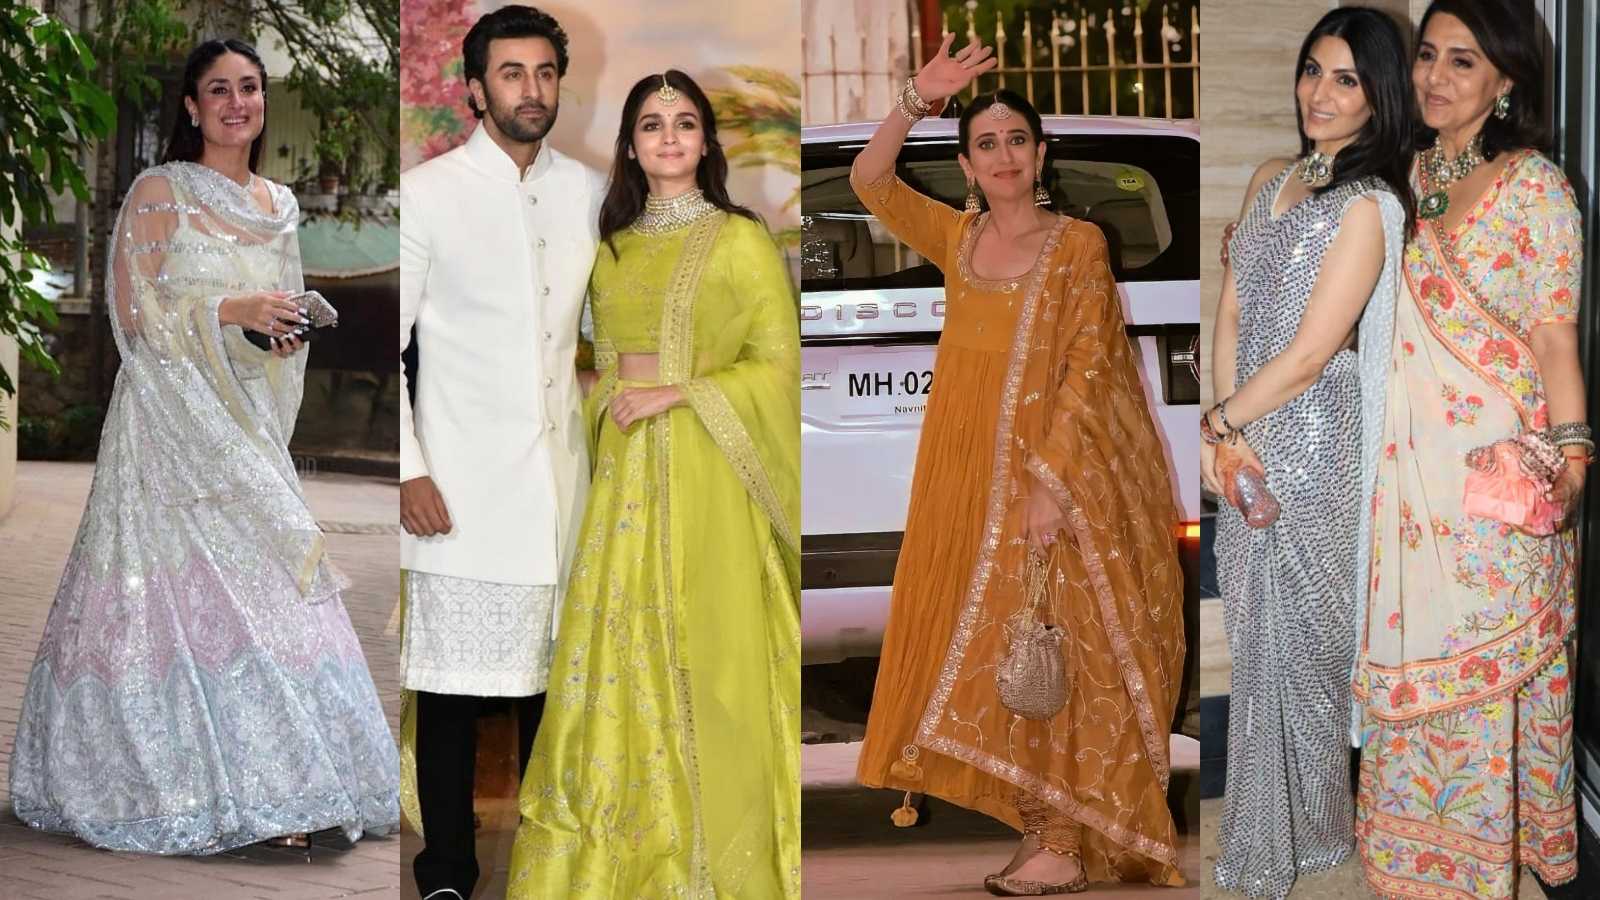 Ranbir Kapoor - Alia Bhatt wedding: Kareena Kapoor, Karisma Kapoor, Neetu Kapoor and others performed at the mehendi; Pic from rehearsals viral